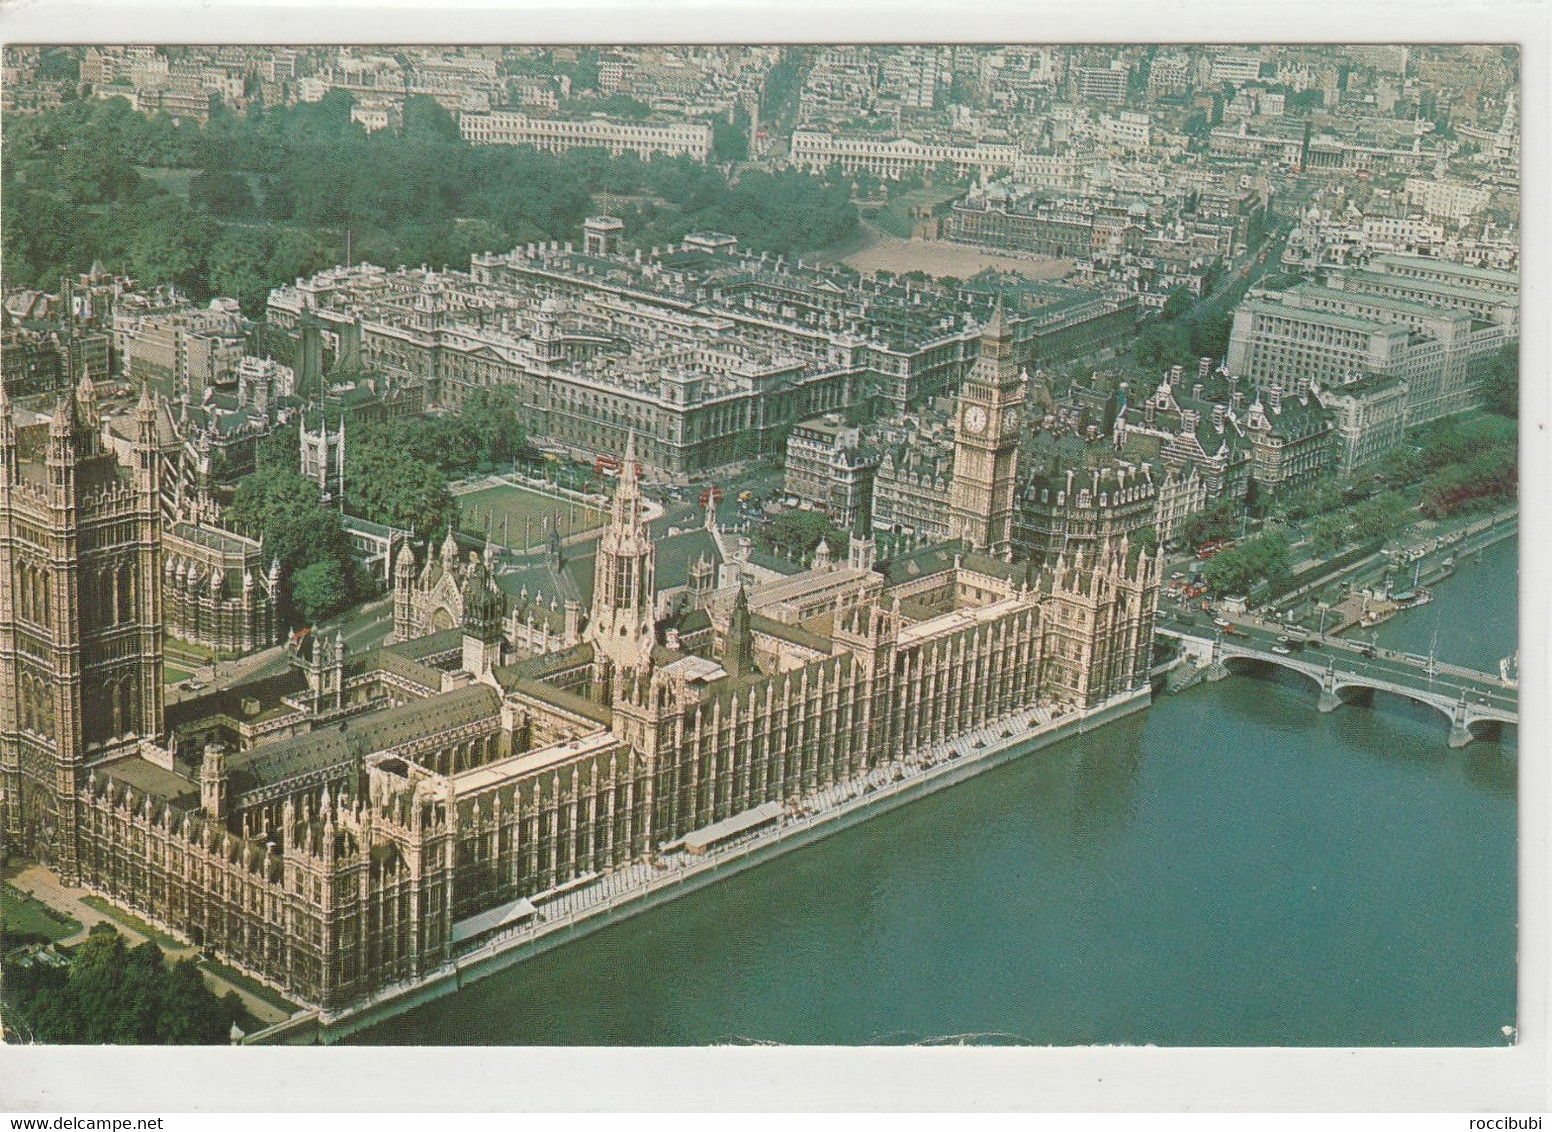 London, Big Ben, Westminster Abbey - Westminster Abbey